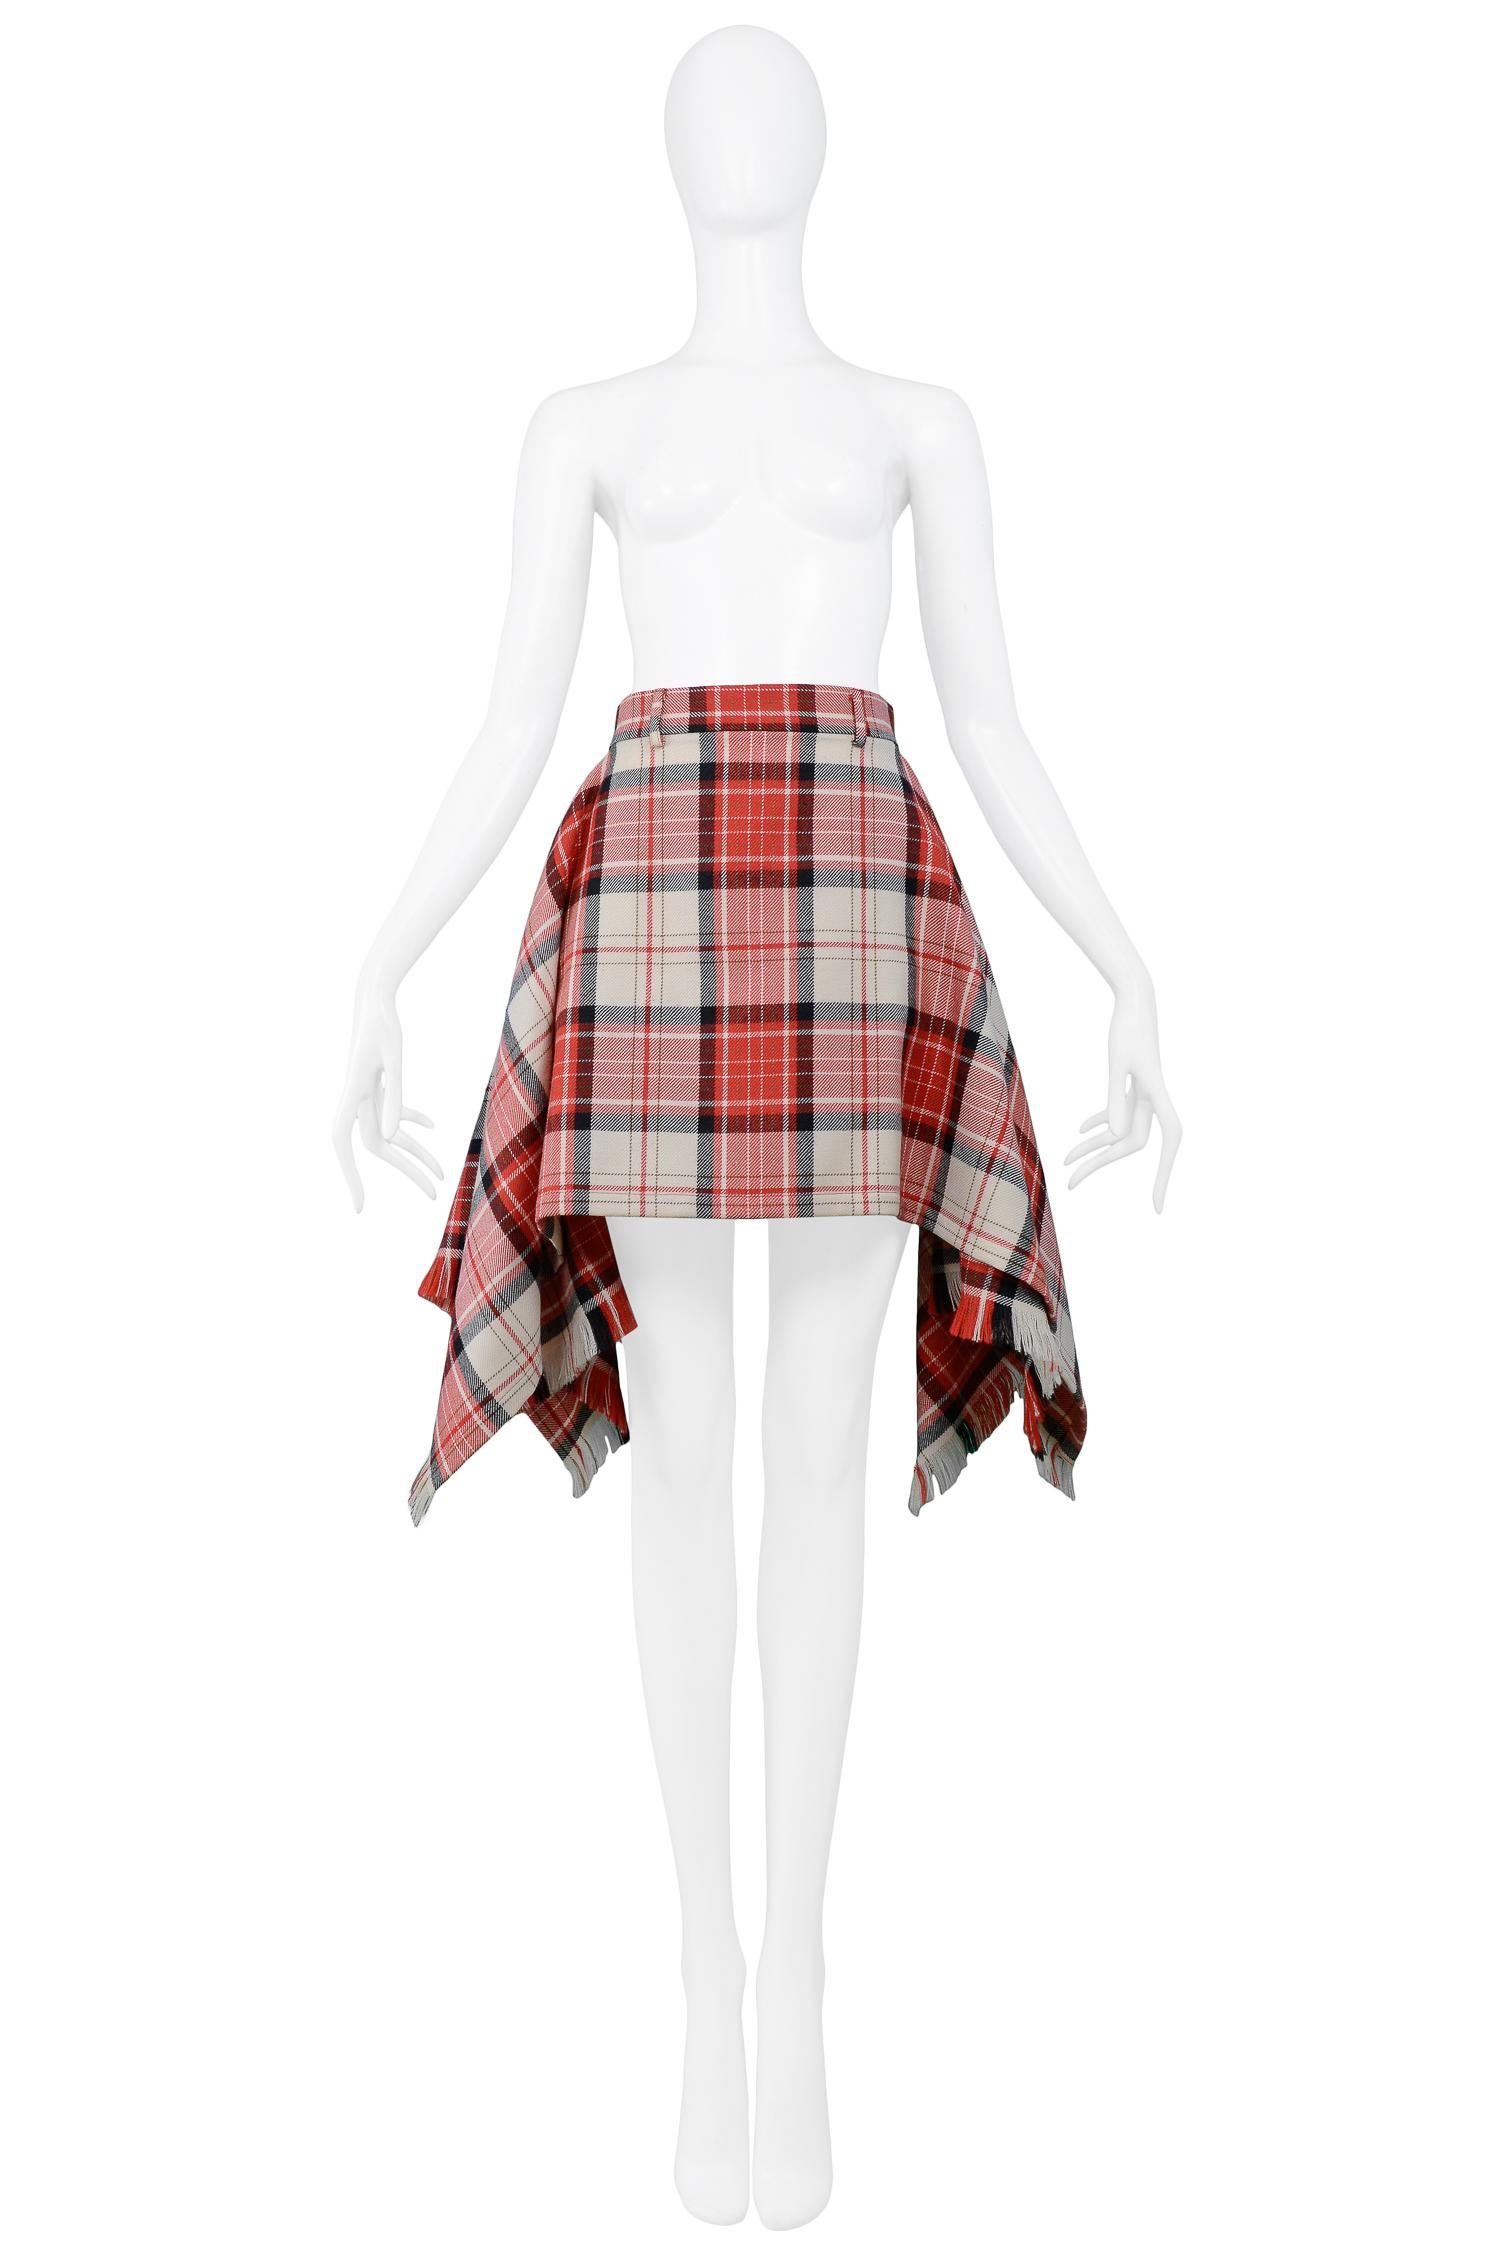 Gray Jean Paul Gaultier Red & White Plaid Blanket Skirt 1991 For Sale